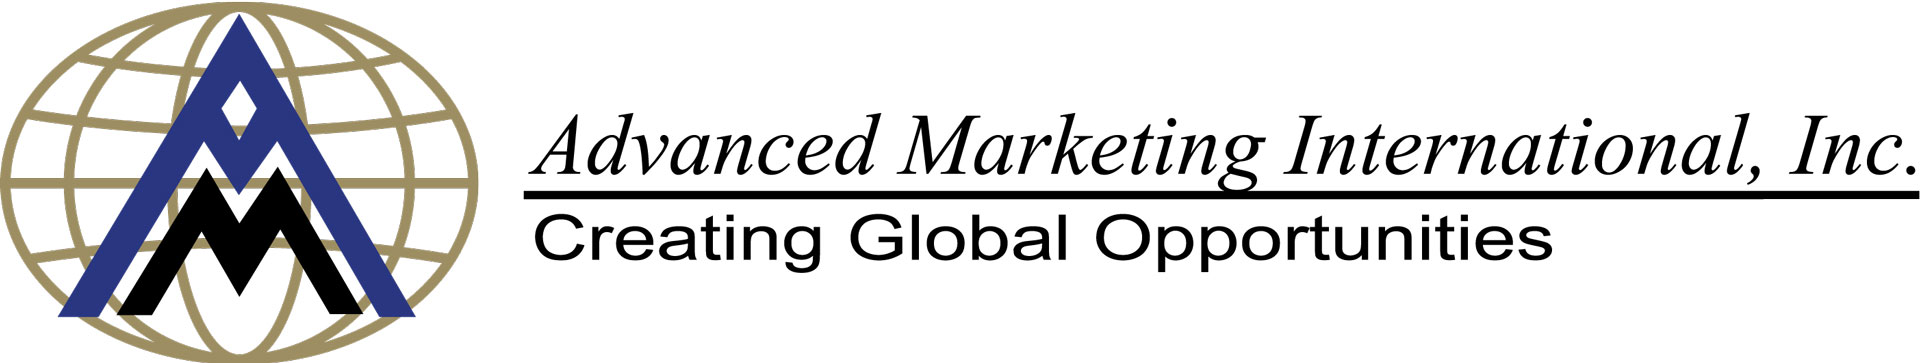 Advanced Marketing International, Inc.